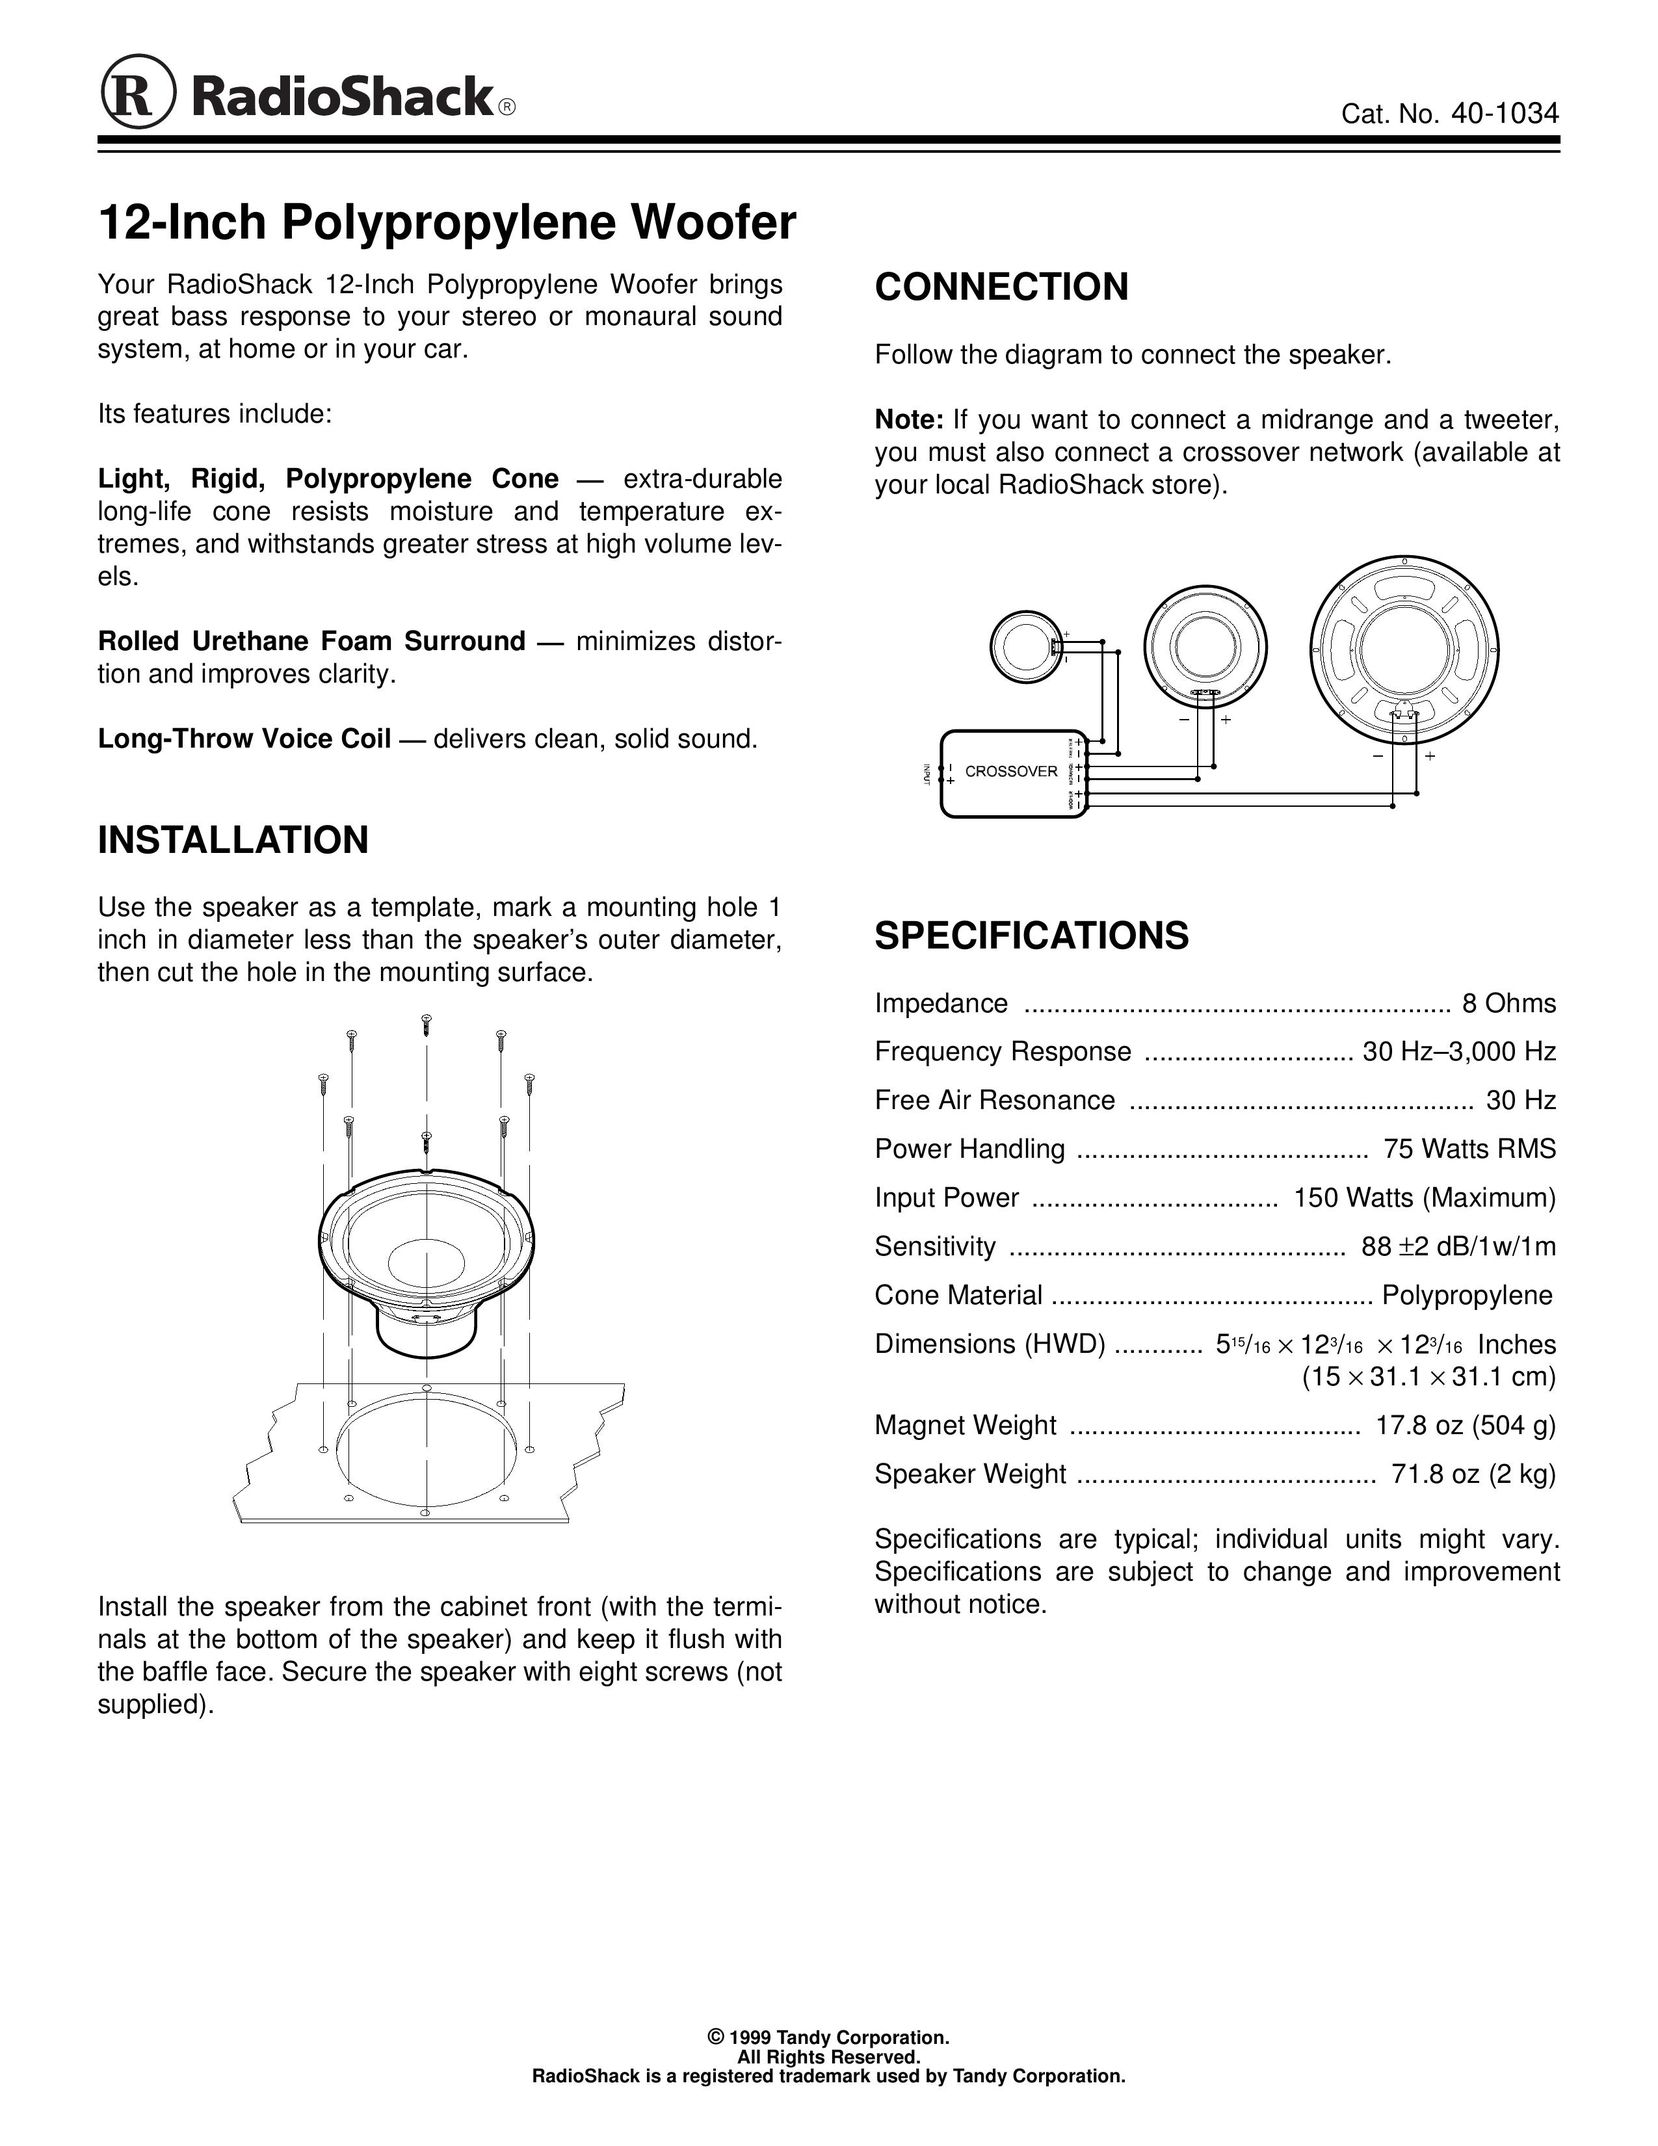 Radio Shack 40-1034 Speaker User Manual